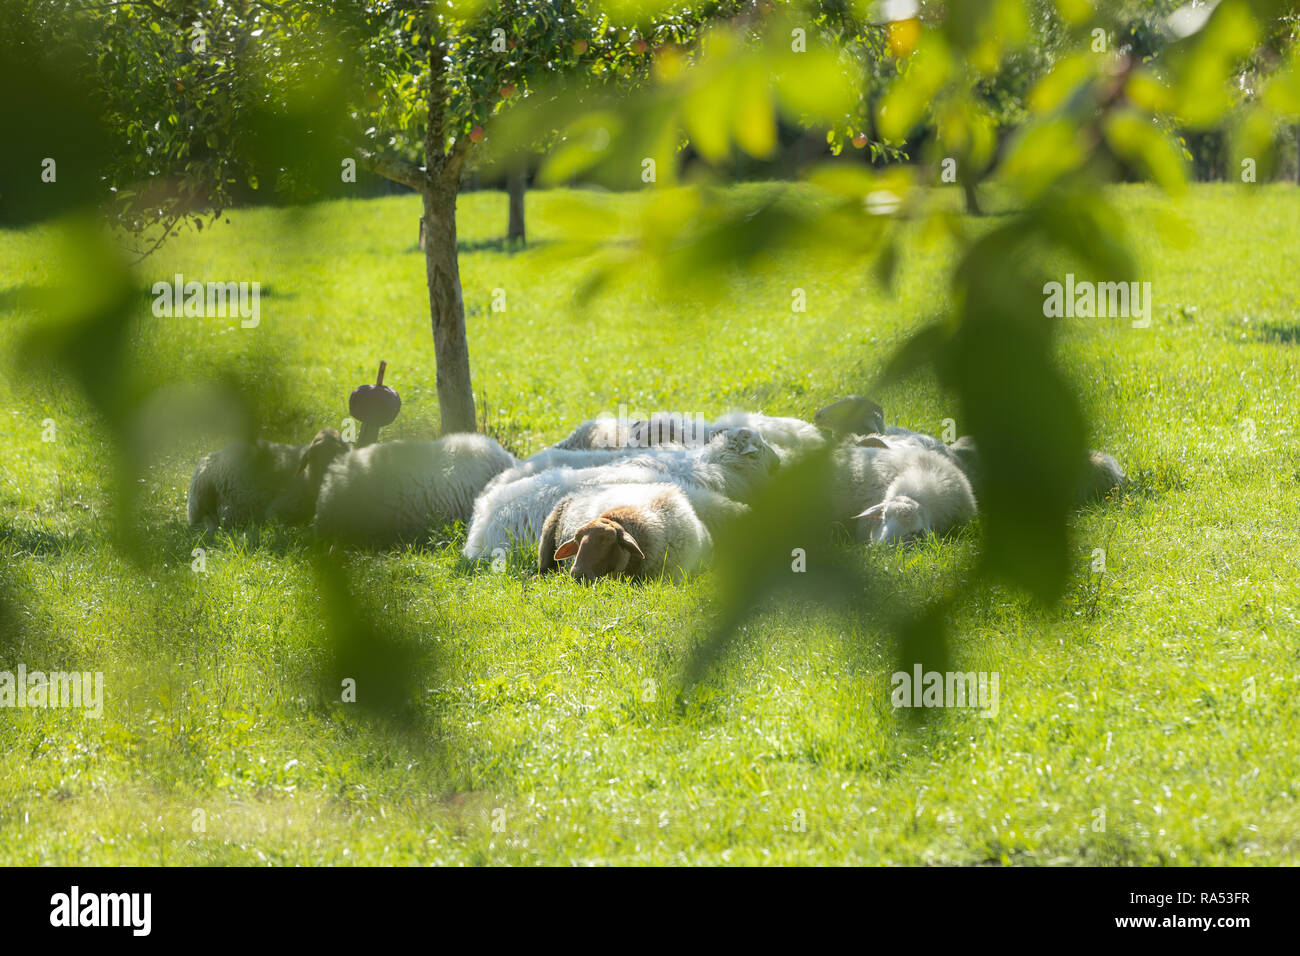 sheeps of willow  Schafherde  flock of sheep  sheep of willow;Schafe auf der Weide Stock Photo